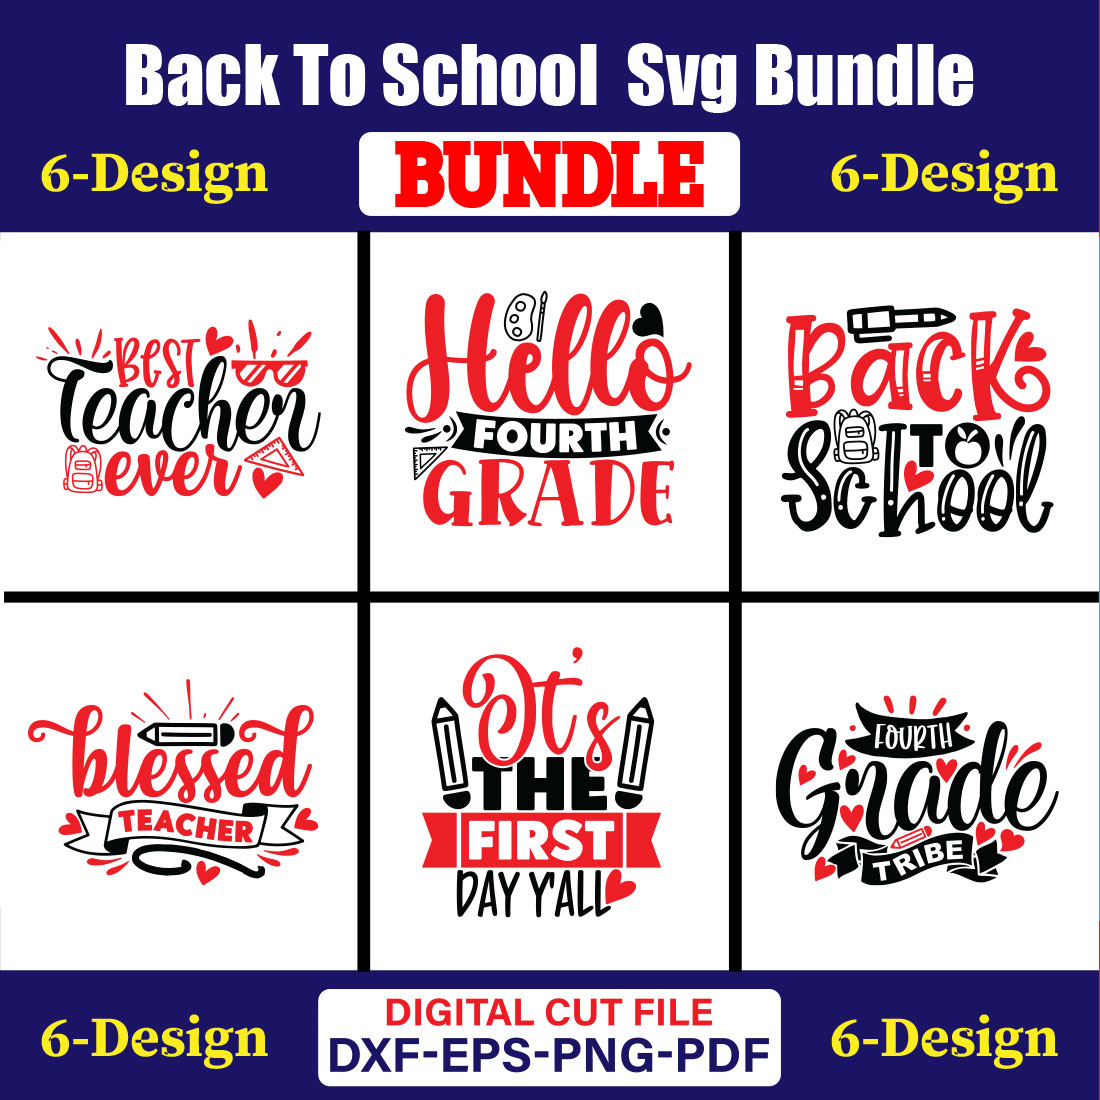 Back To School T-shirt Design Bundle Vol-37 cover image.